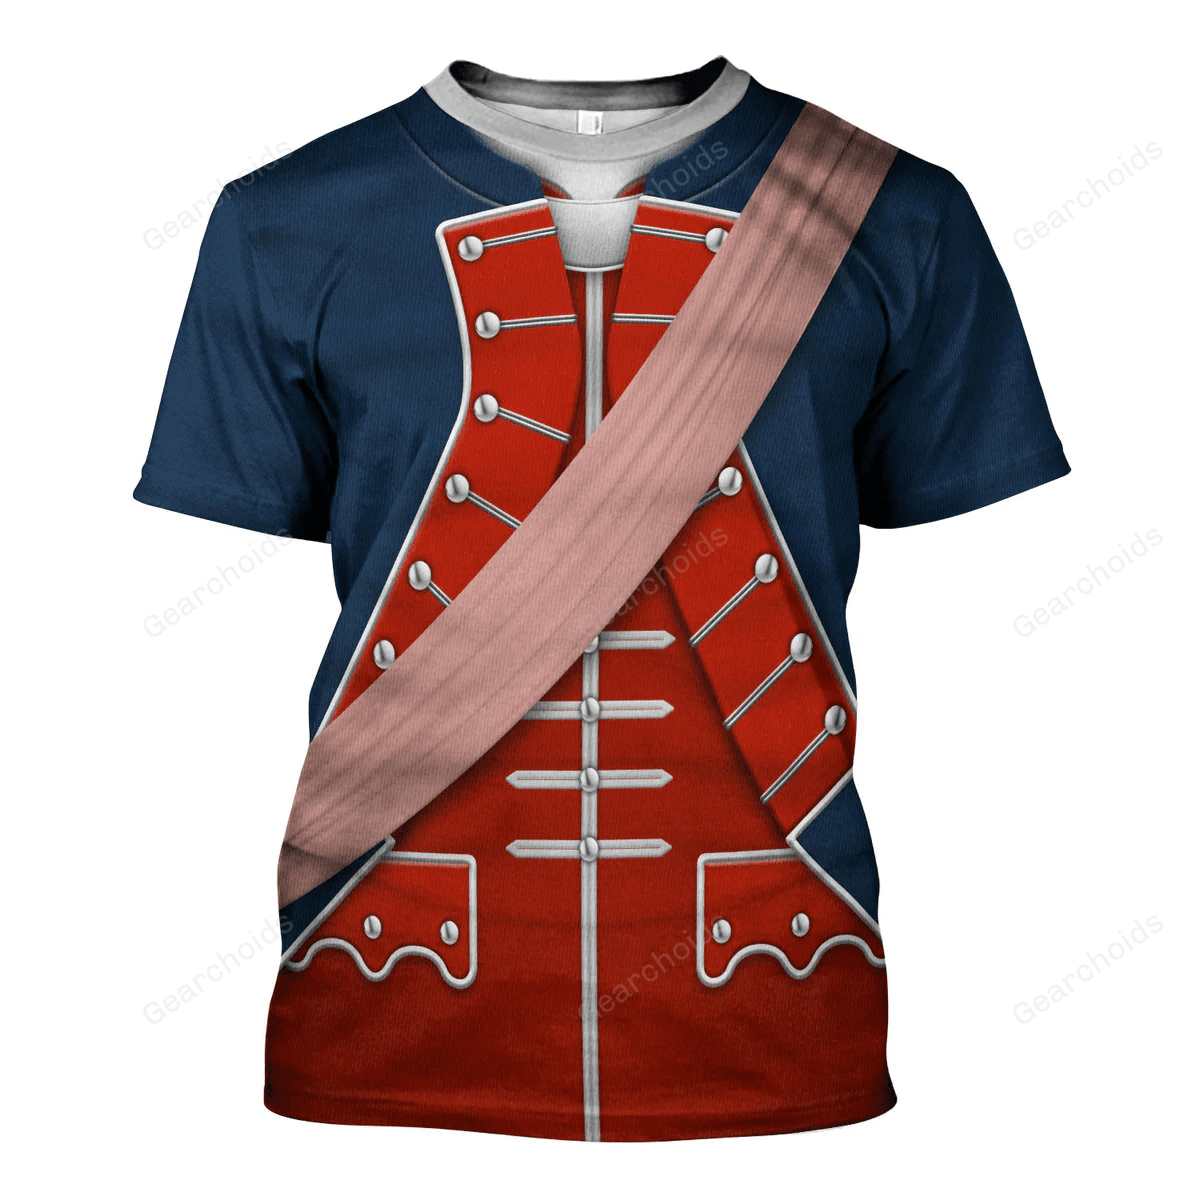 George Washington In Uniform As Colonel Uniform T-Shirt